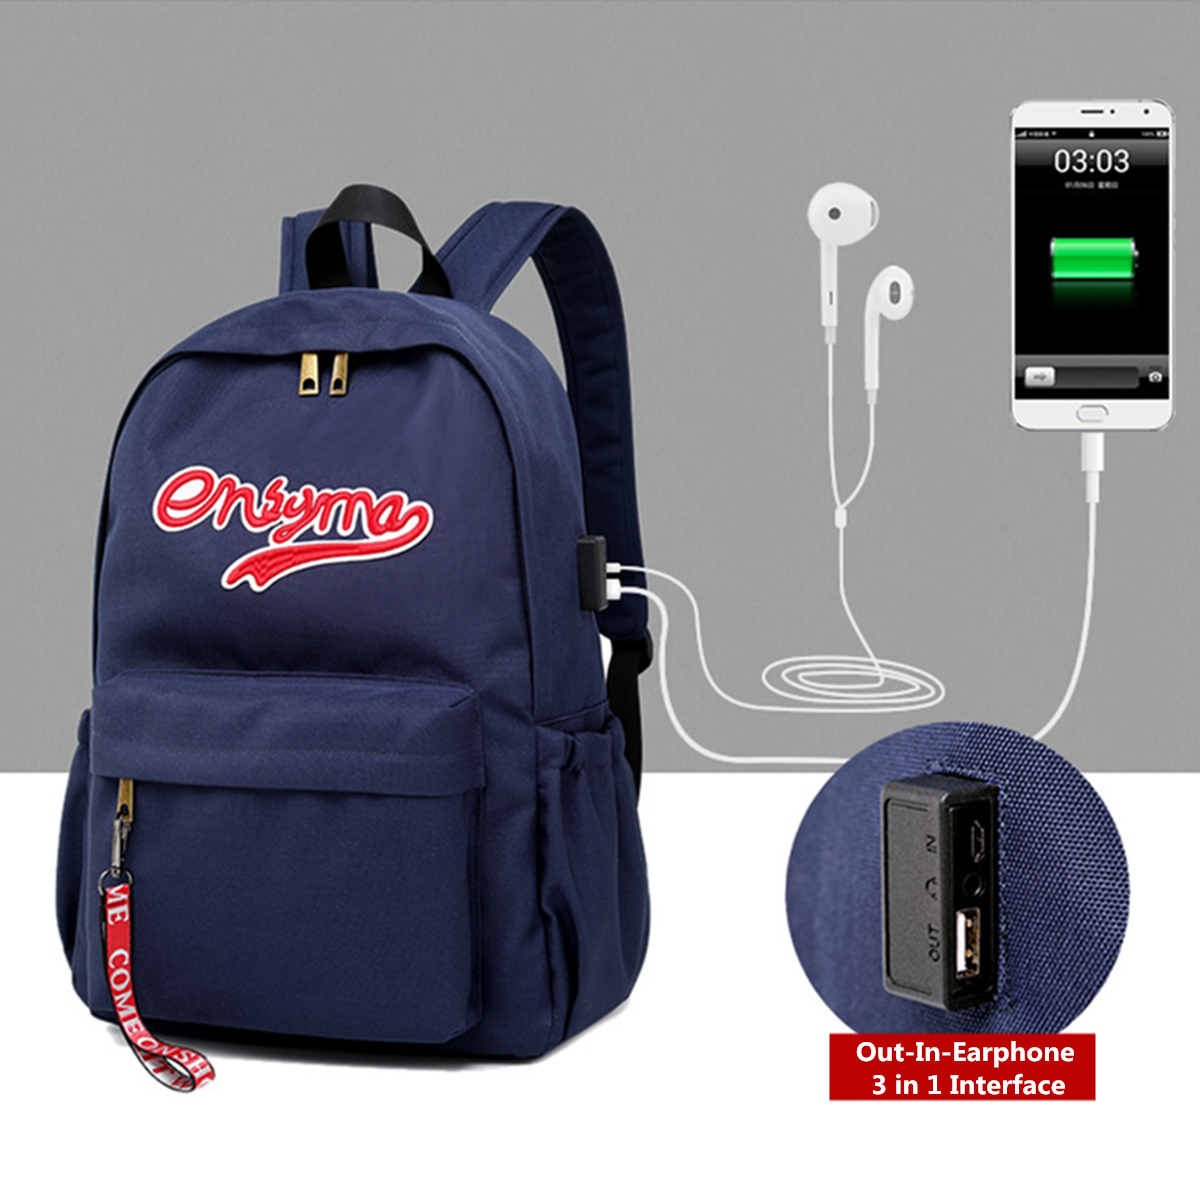 156-Inch-USB-Laptop-Backpack-Waterproof-School-Bag-Travel-Camping-Handbag-Shoulder-Bag-1355799-1